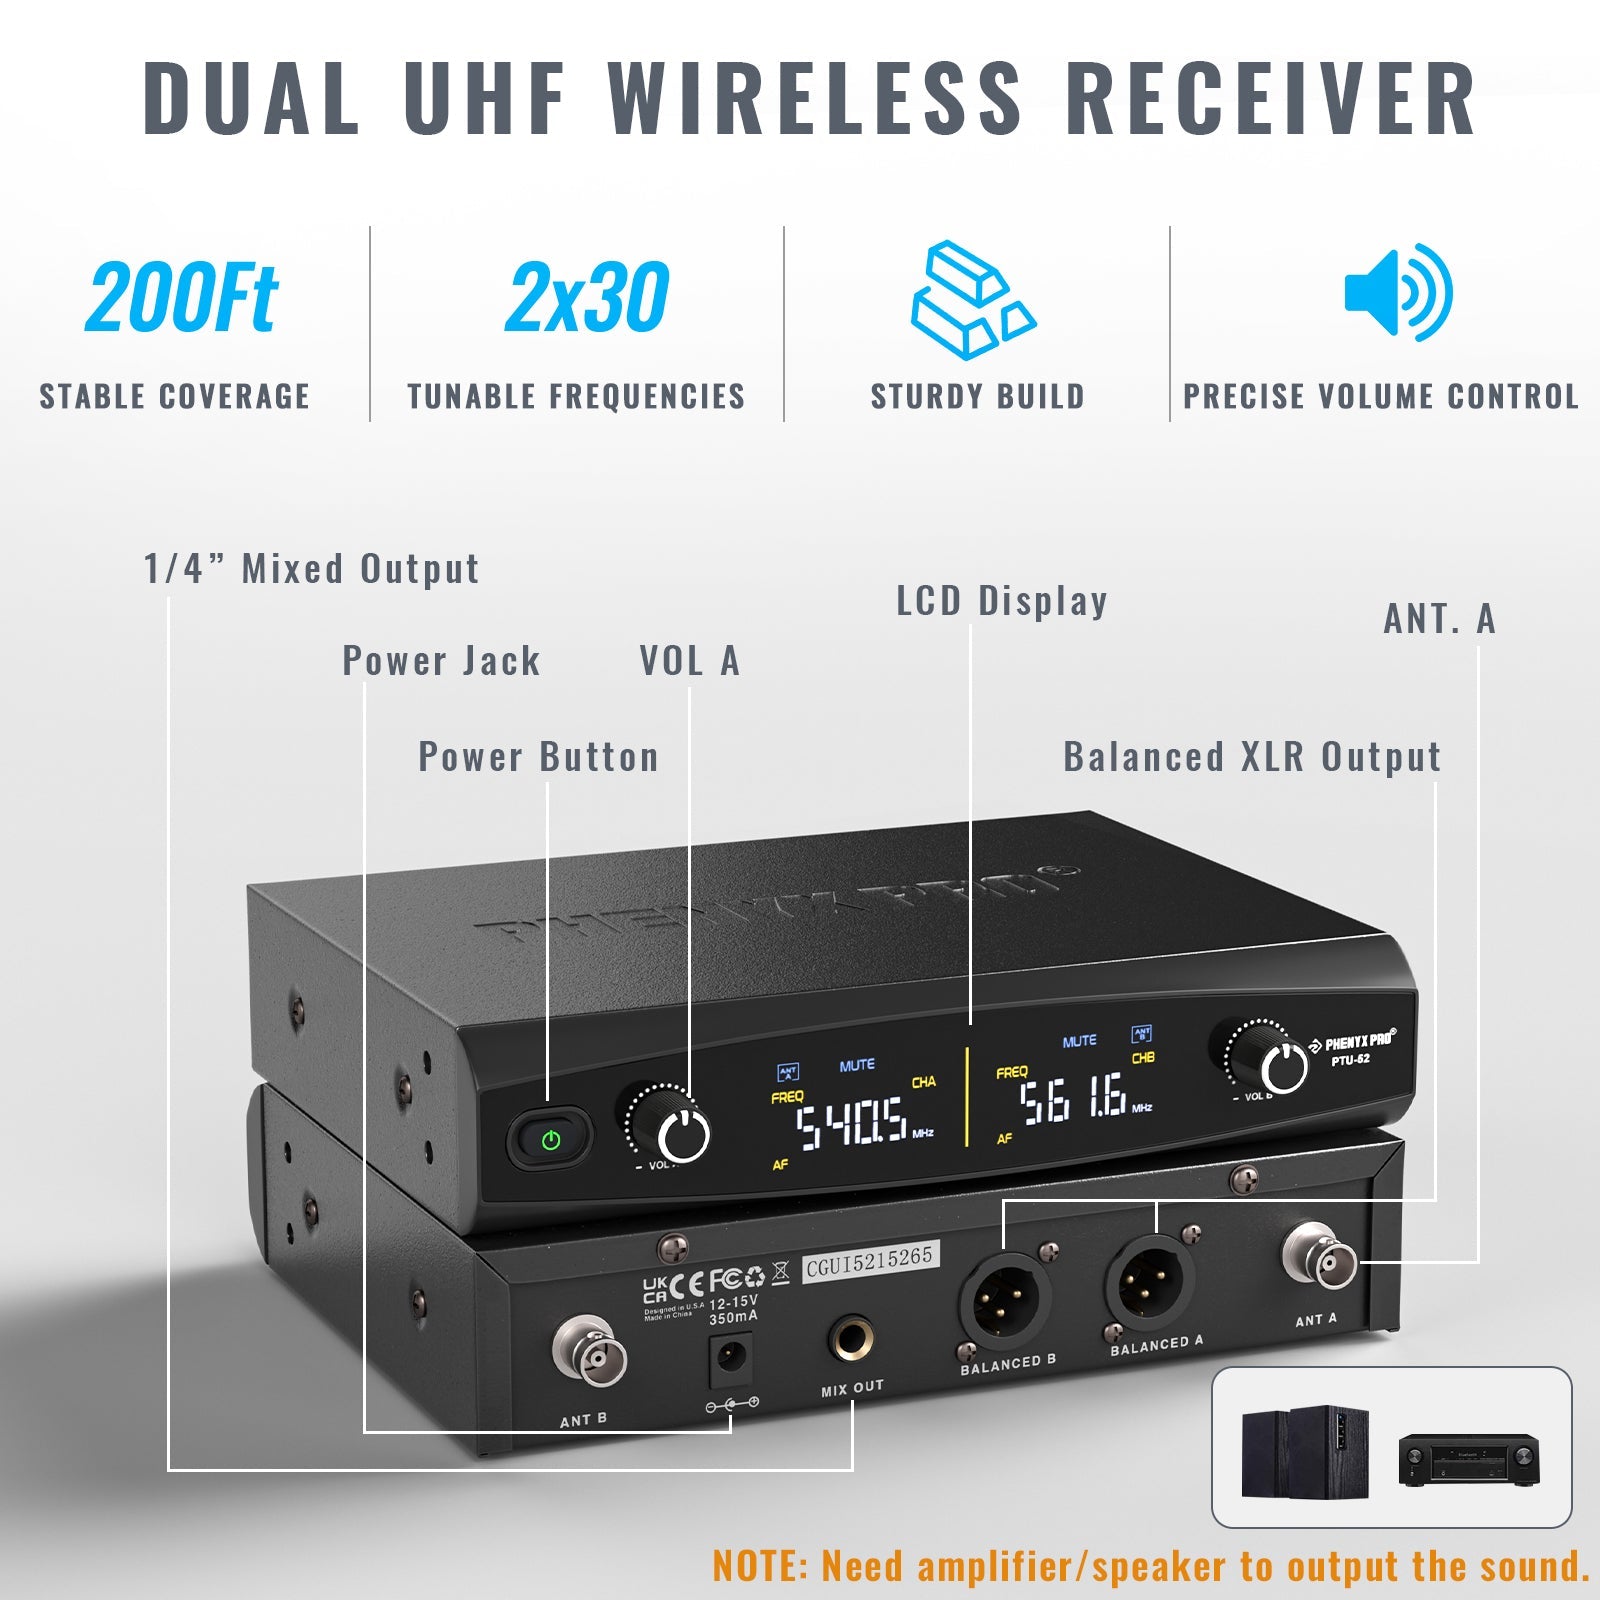 PTU-52-1H1B | Dual Wireless Microphone System w/ Frequency Hopping